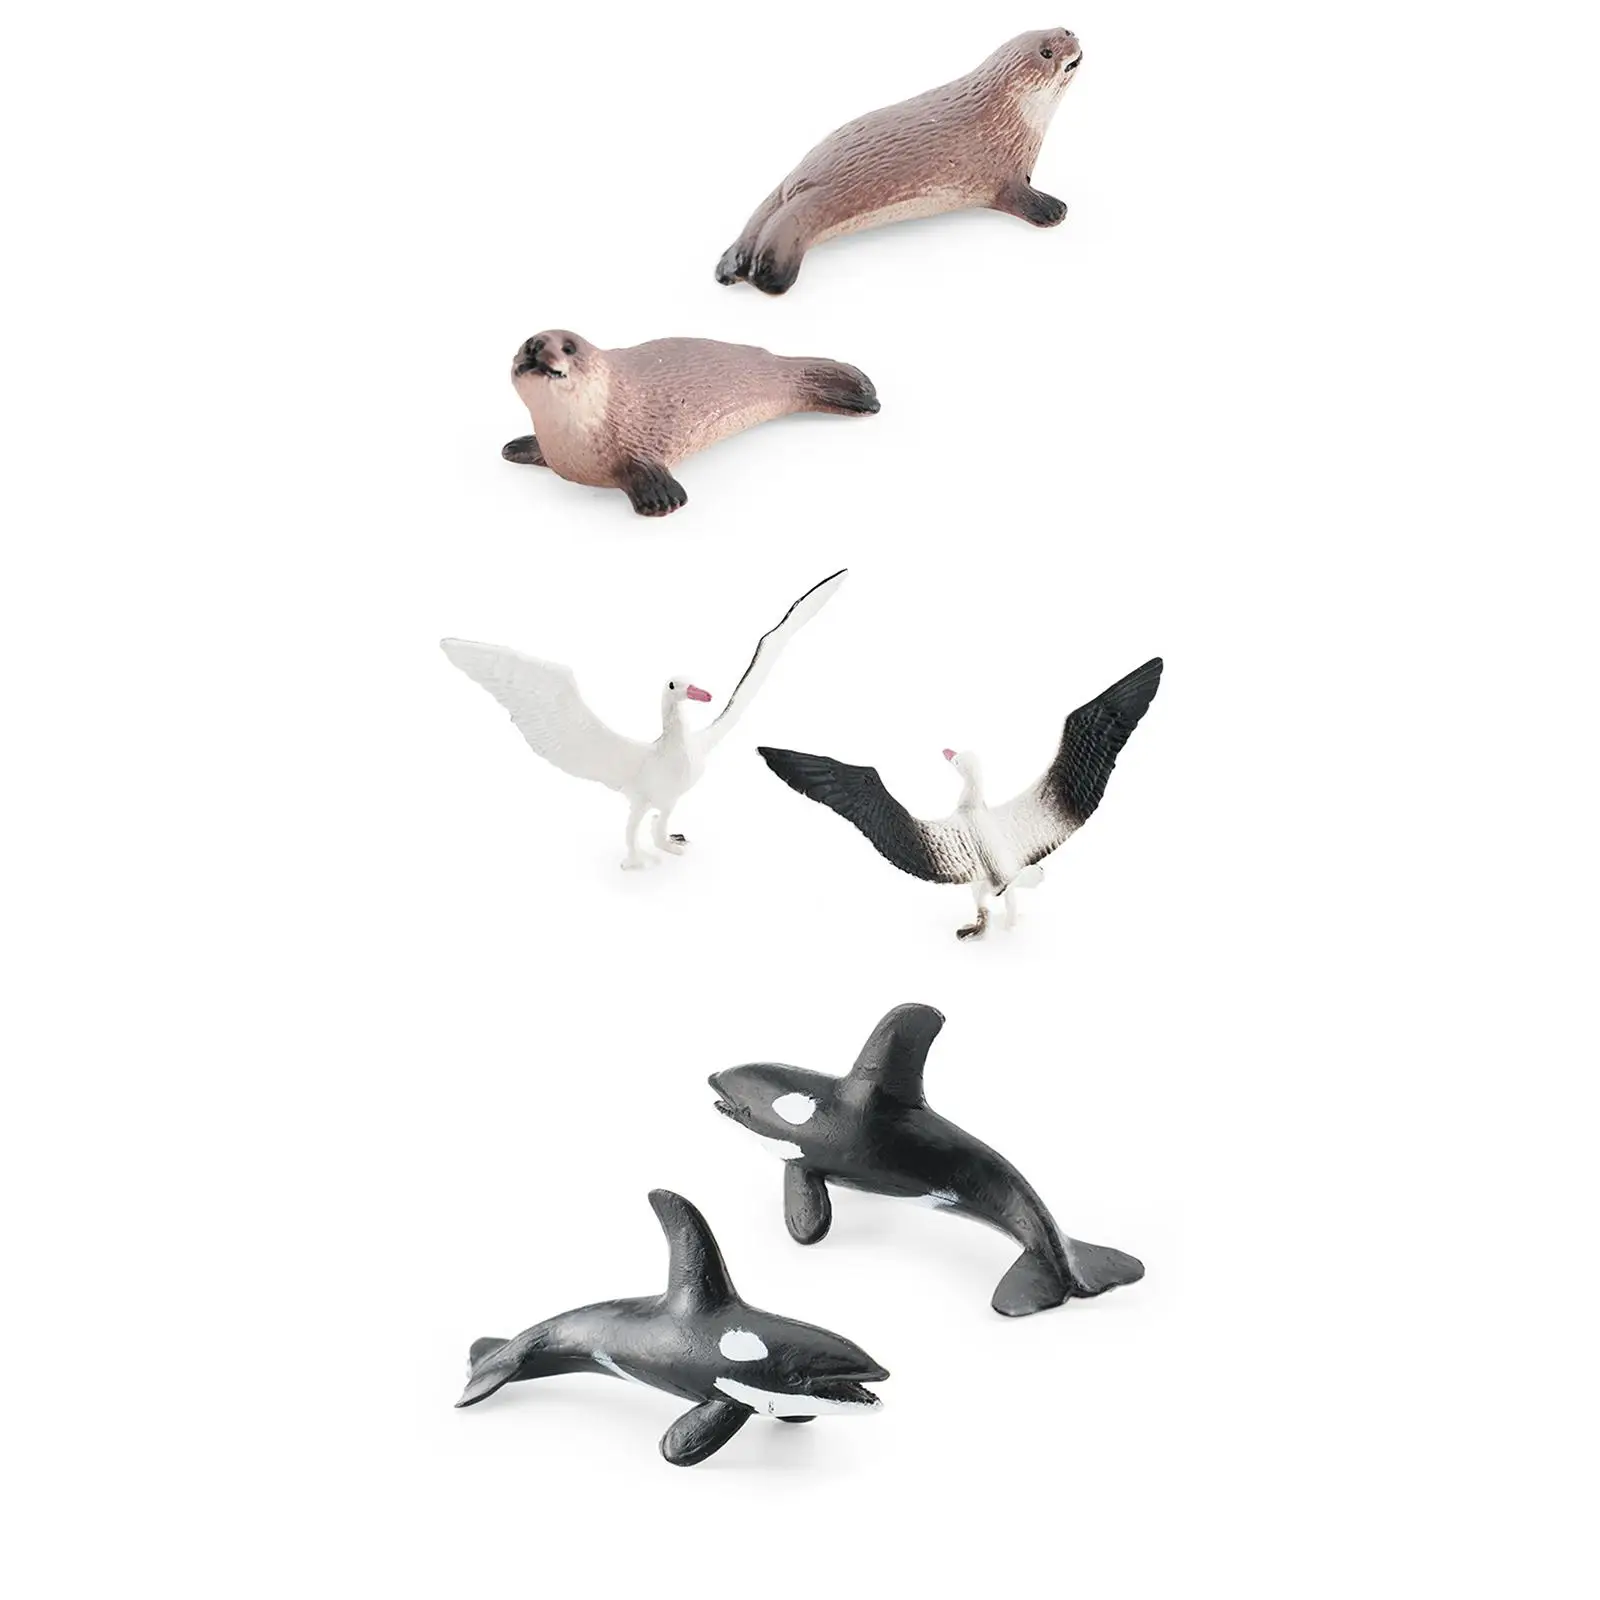 10 Pieces Antarctic Marine Animals Miniatures for Desktop Decor Party Favors